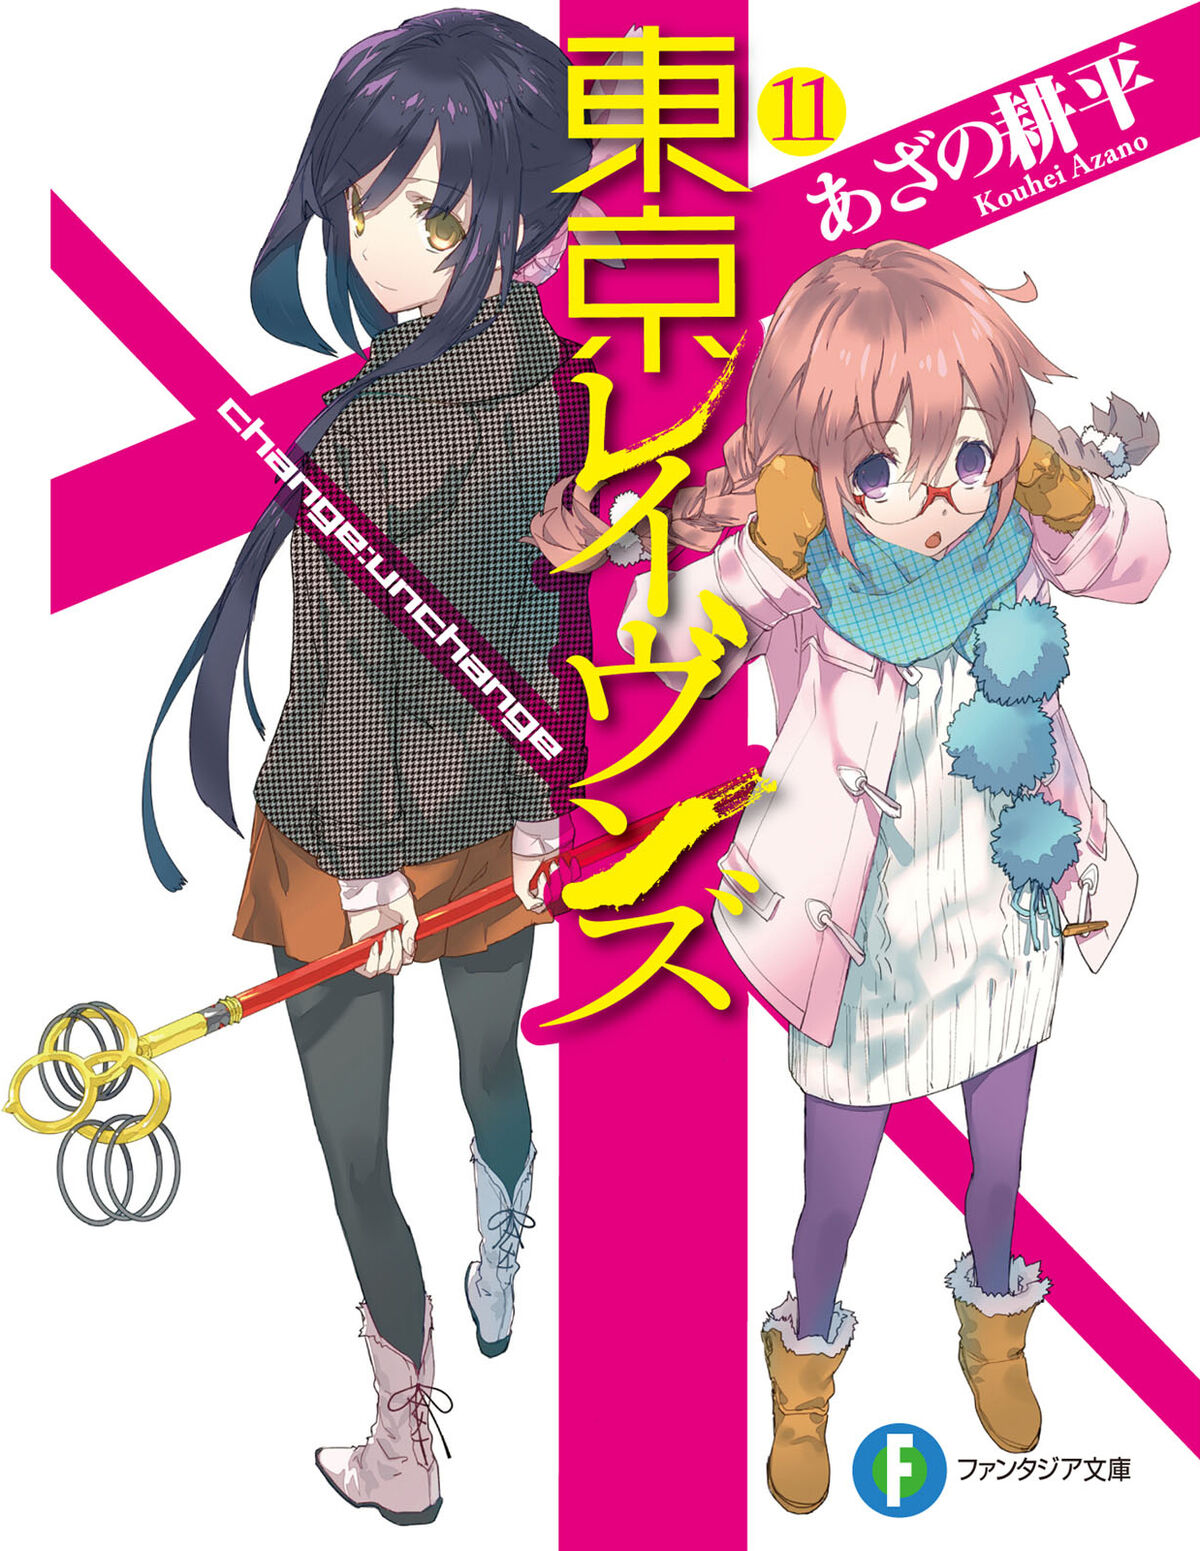 Tokyo Ravens Light Novel Volume EX1, Tokyo Ravens Wiki